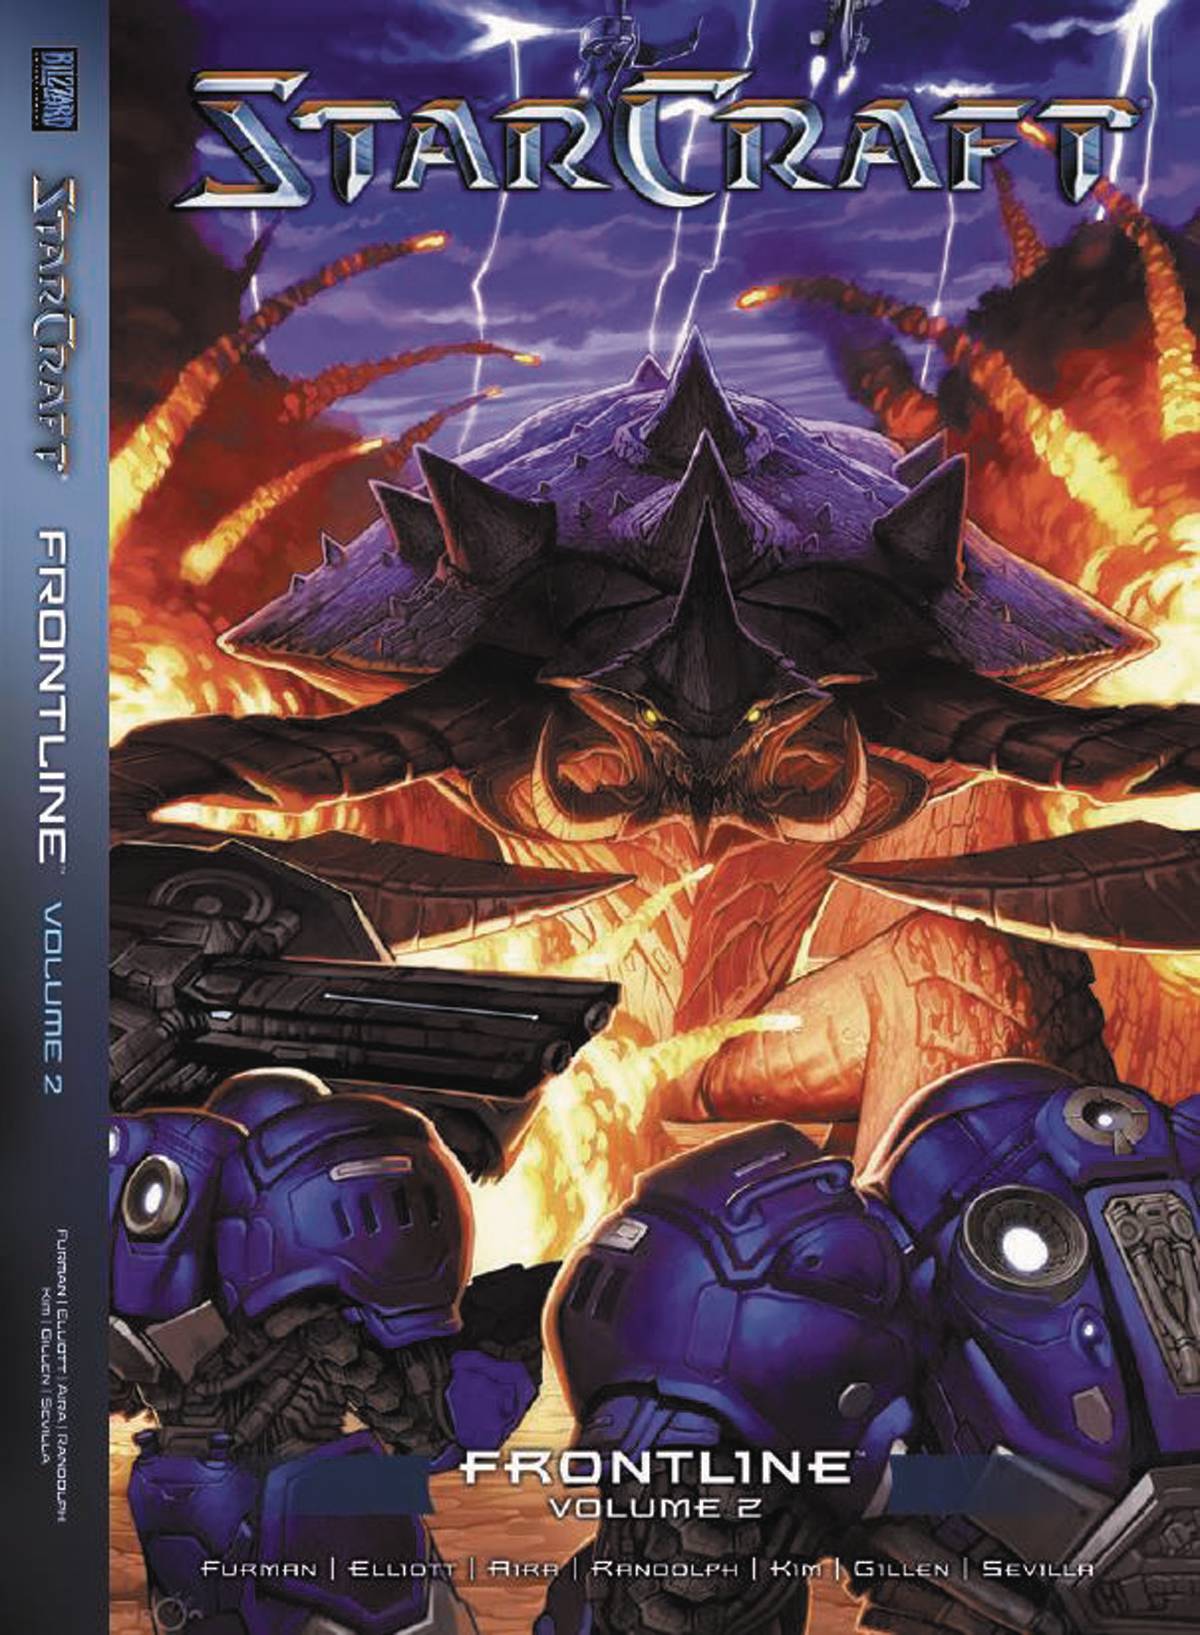 Starcraft Frontline Graphic Novel Volume 2